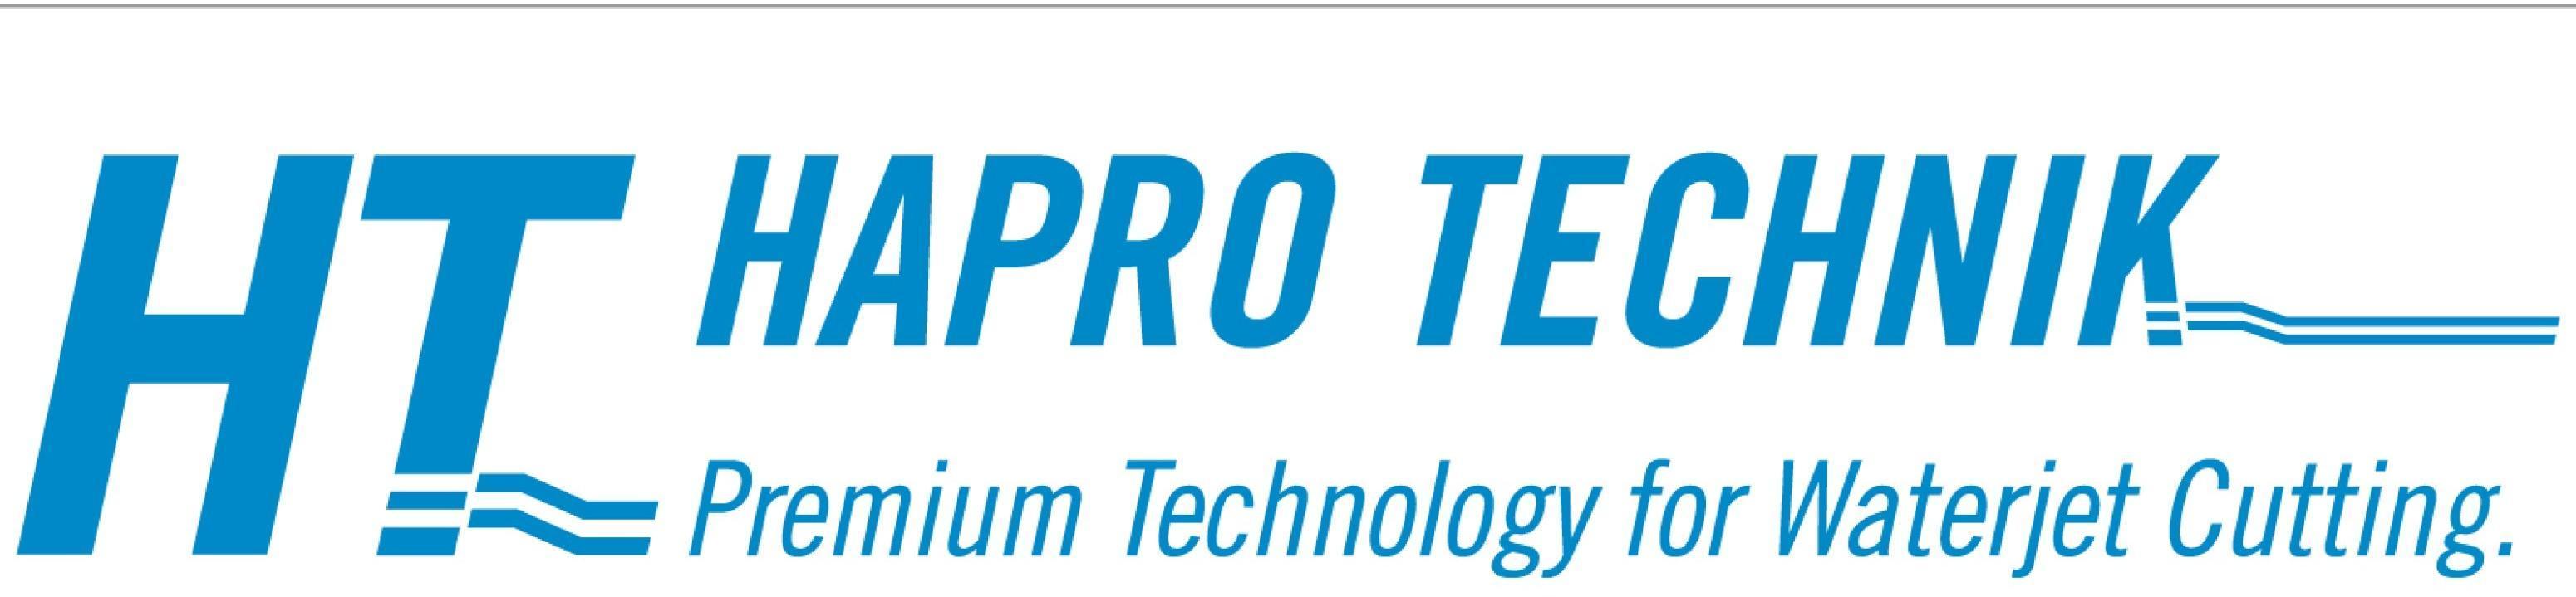 Logo Hapro Technik Ges.m.b.H - Premium Technology for Waterjet Cutting